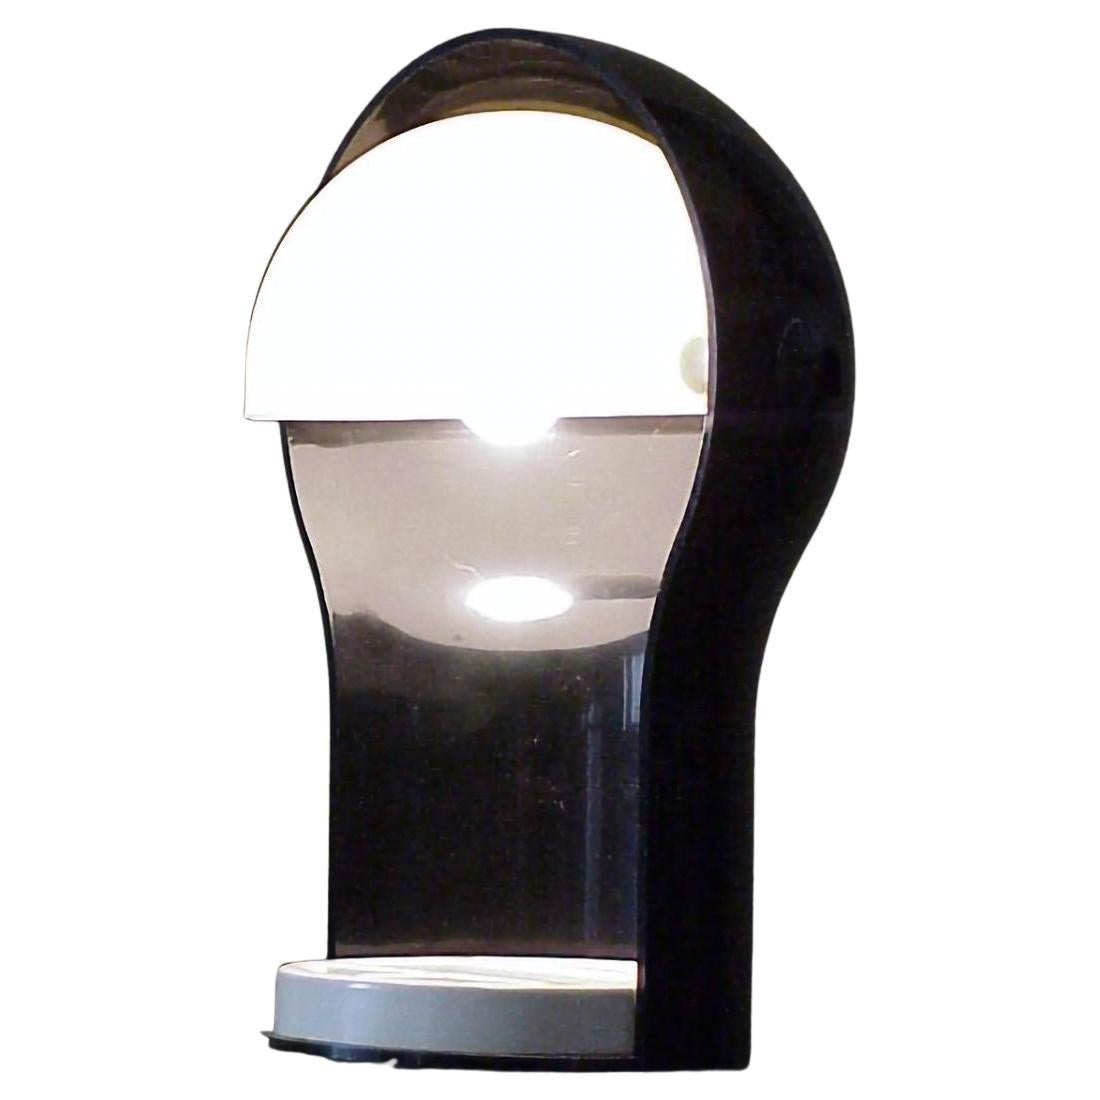 Vintage Telegono Table Lamp by Vico Magistretti Design for Artemide Italy 1969